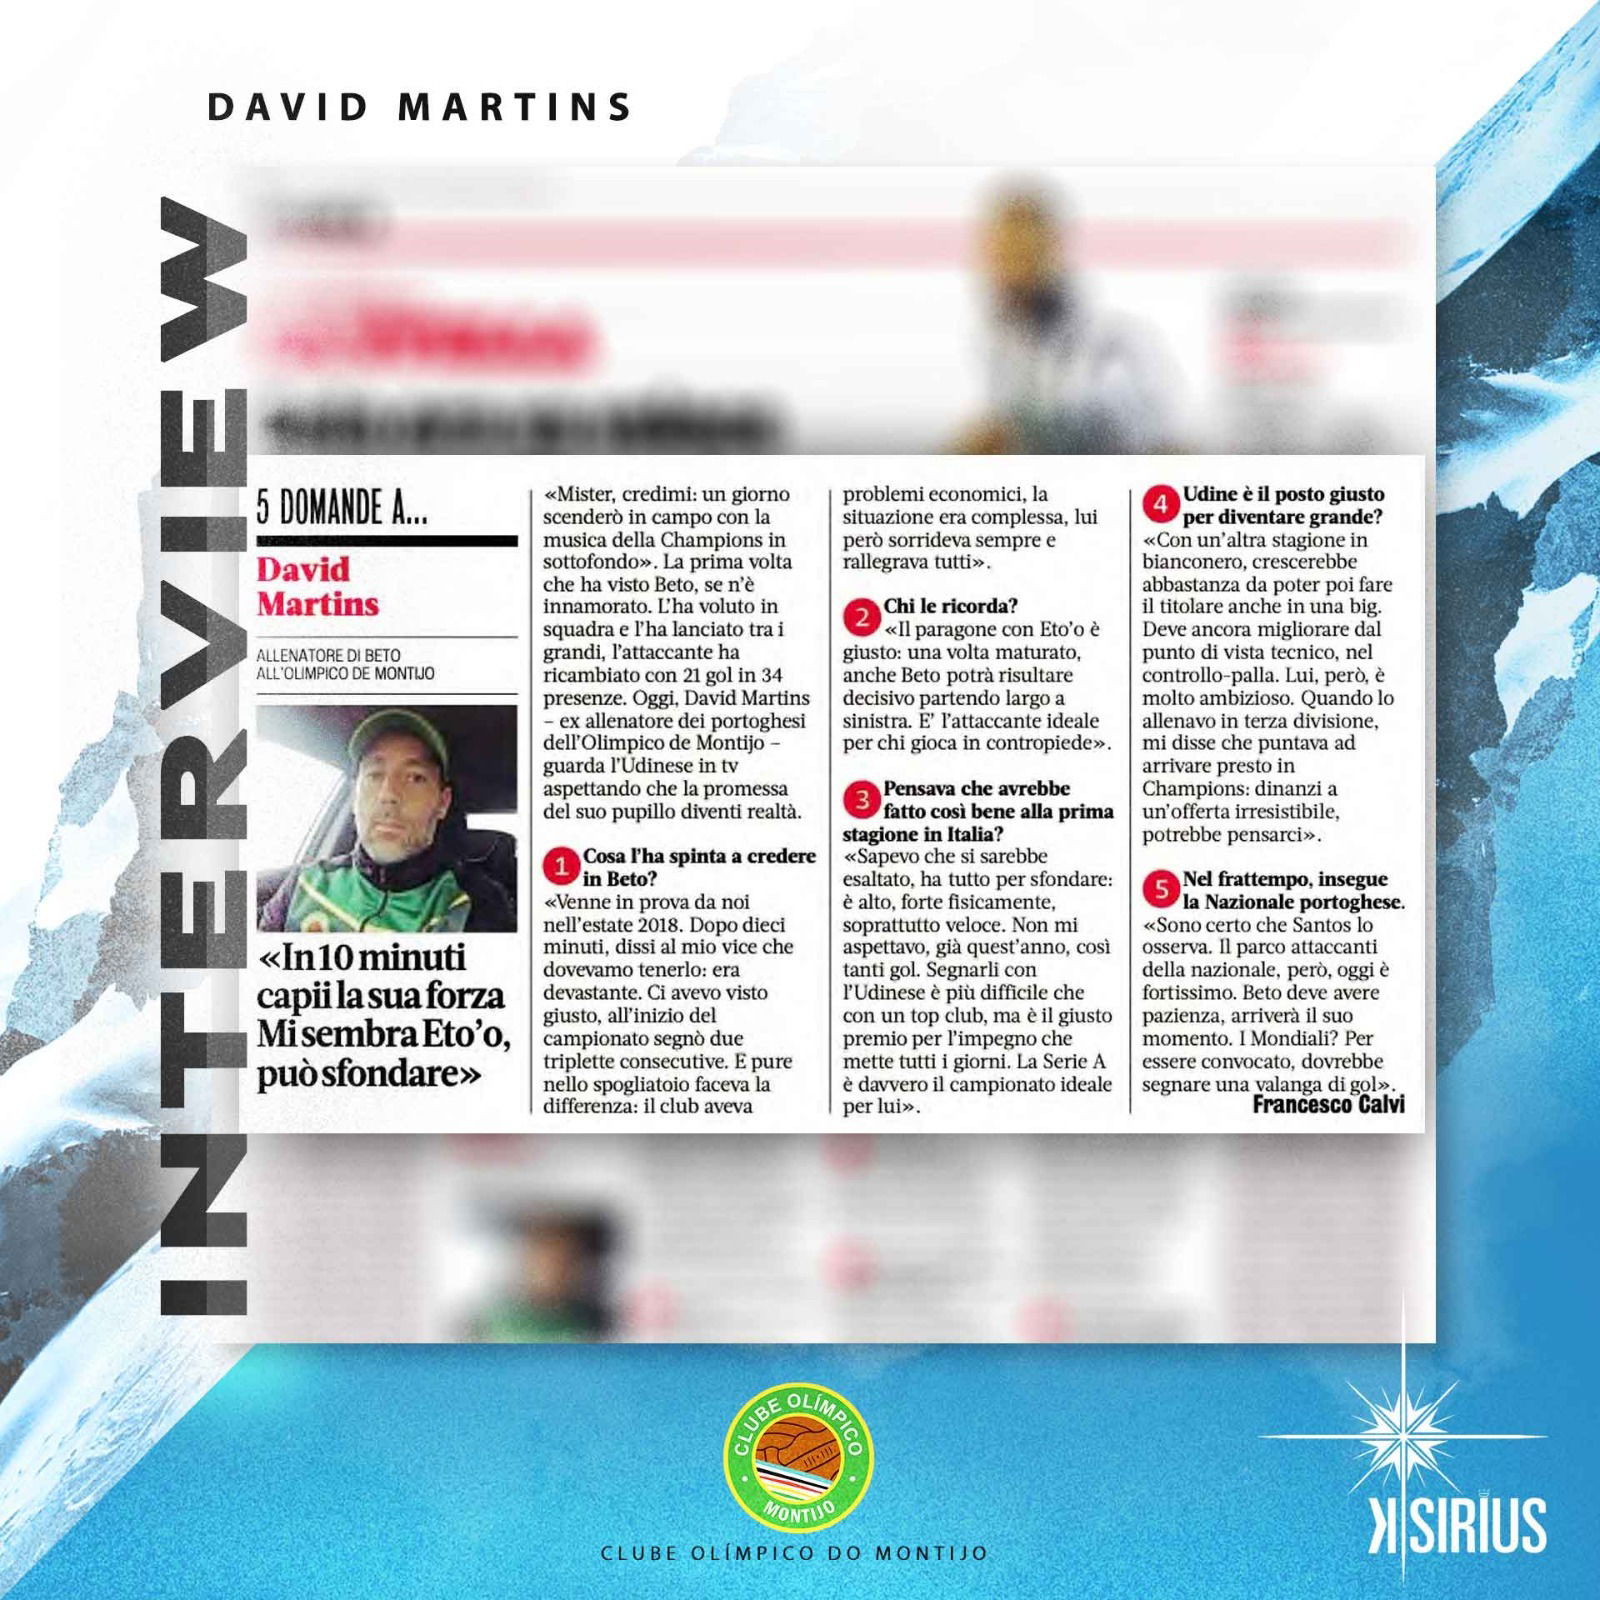 Interview: David Martins